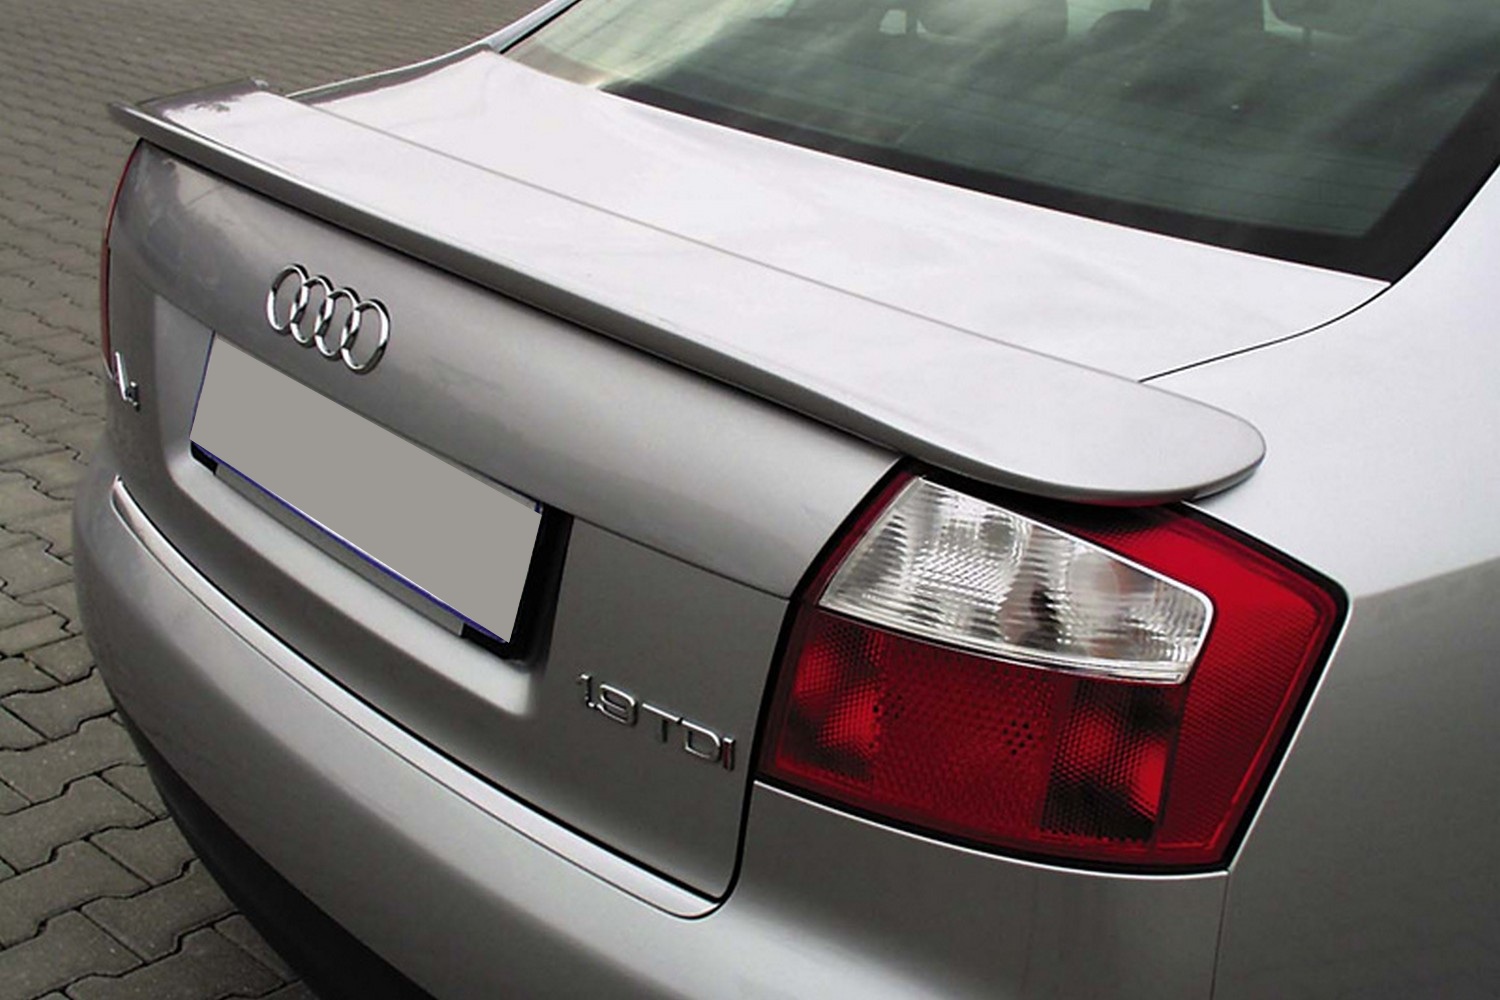 File:Audi A4 B6 rear 20080612.jpg - Wikimedia Commons